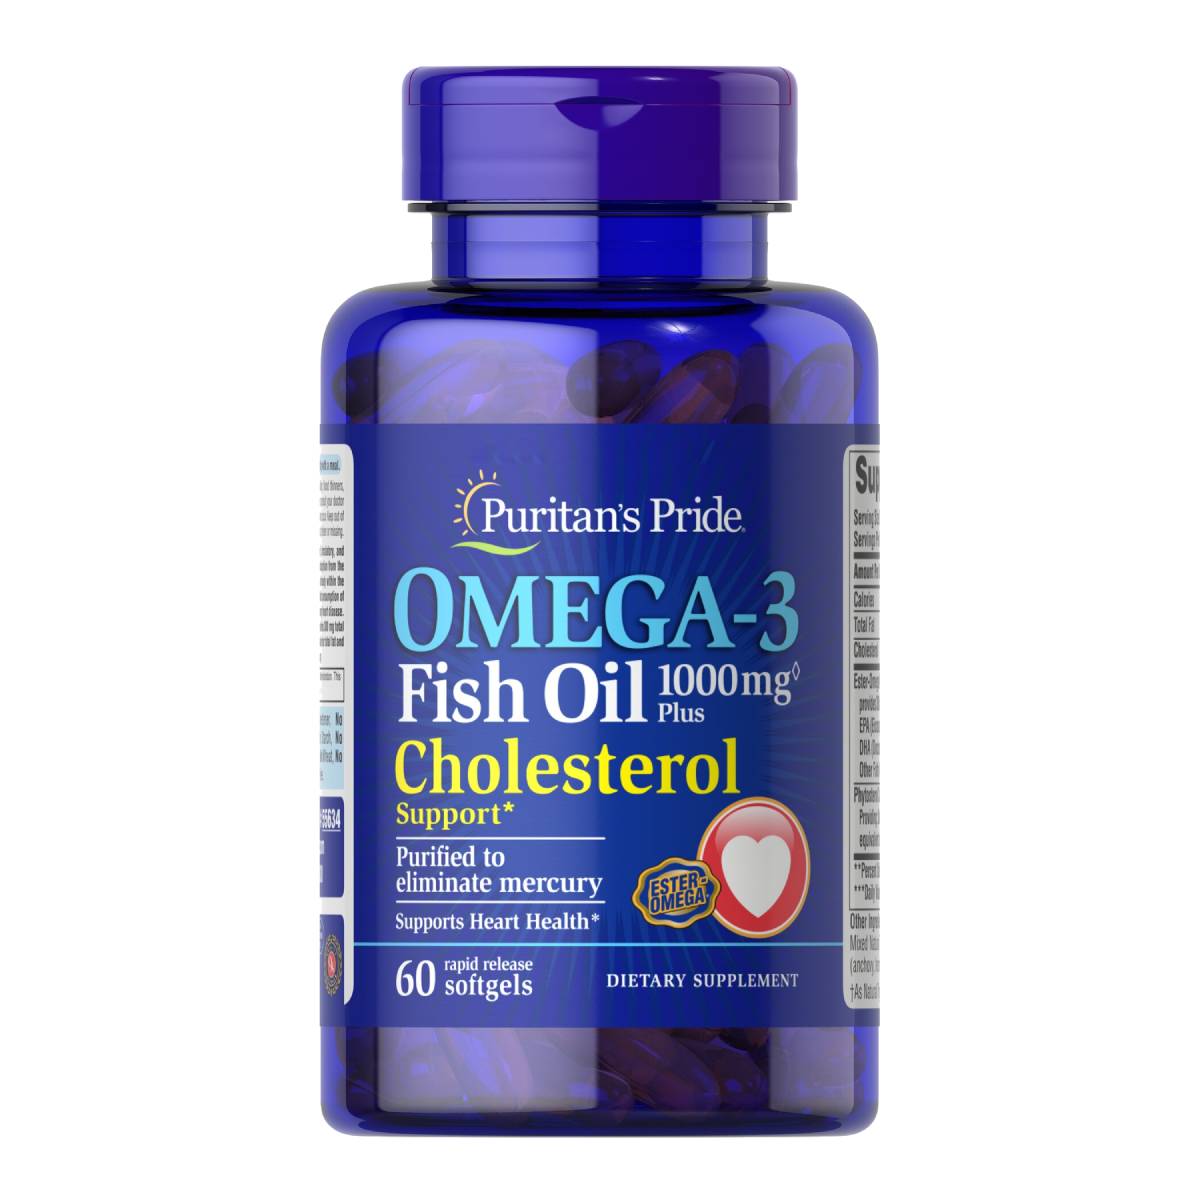 Puritan's Pride, Omega-3 Fish Oil Plus Cholesterol Suort*